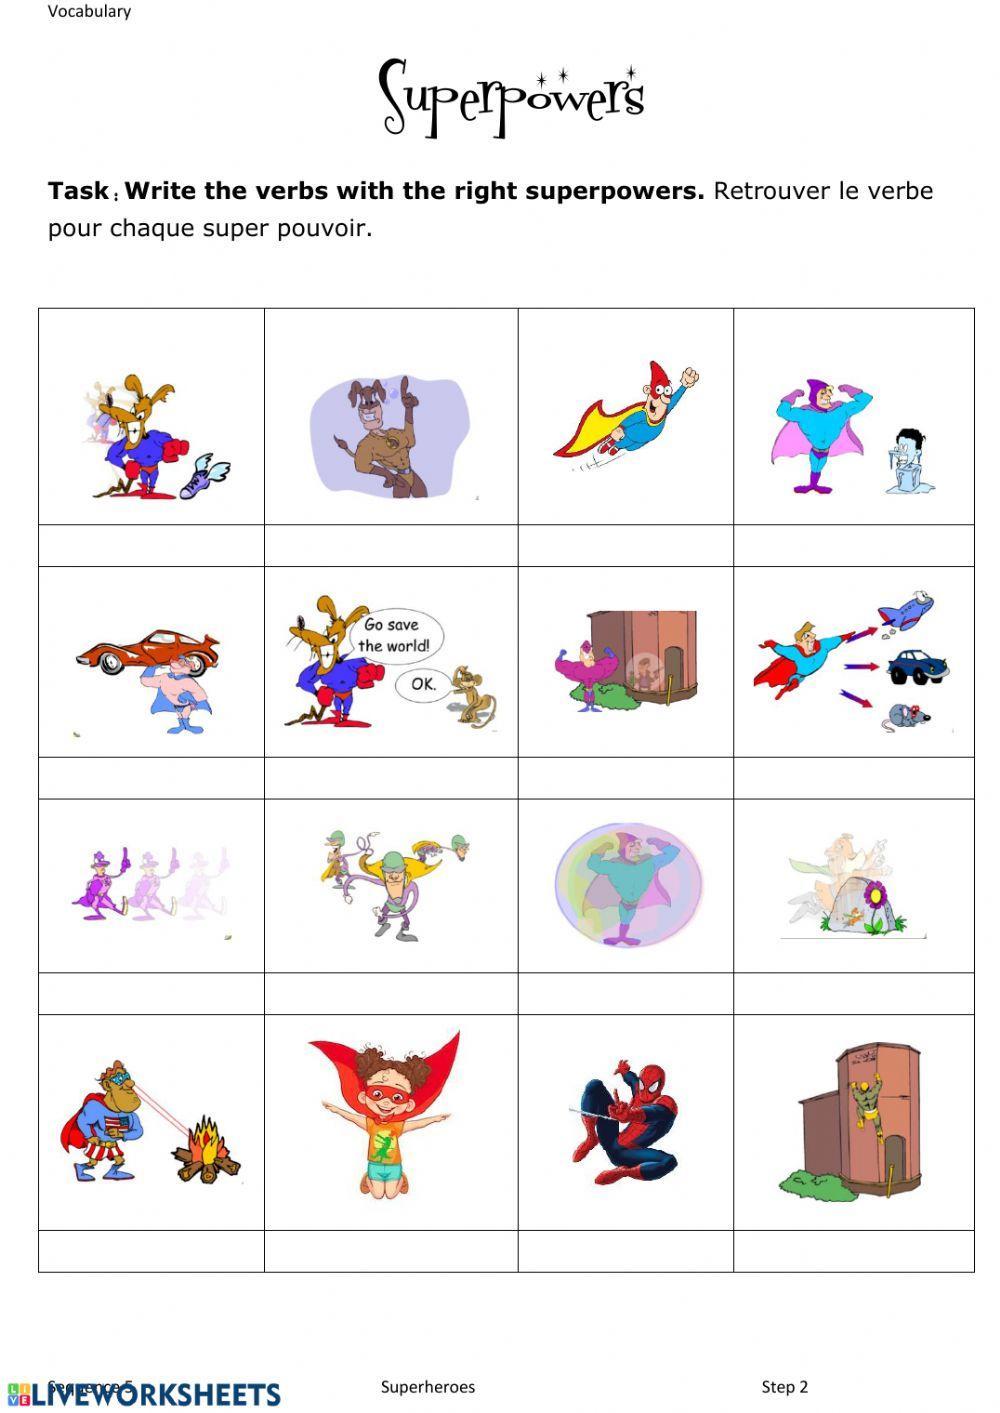 Vocabulary superpowers